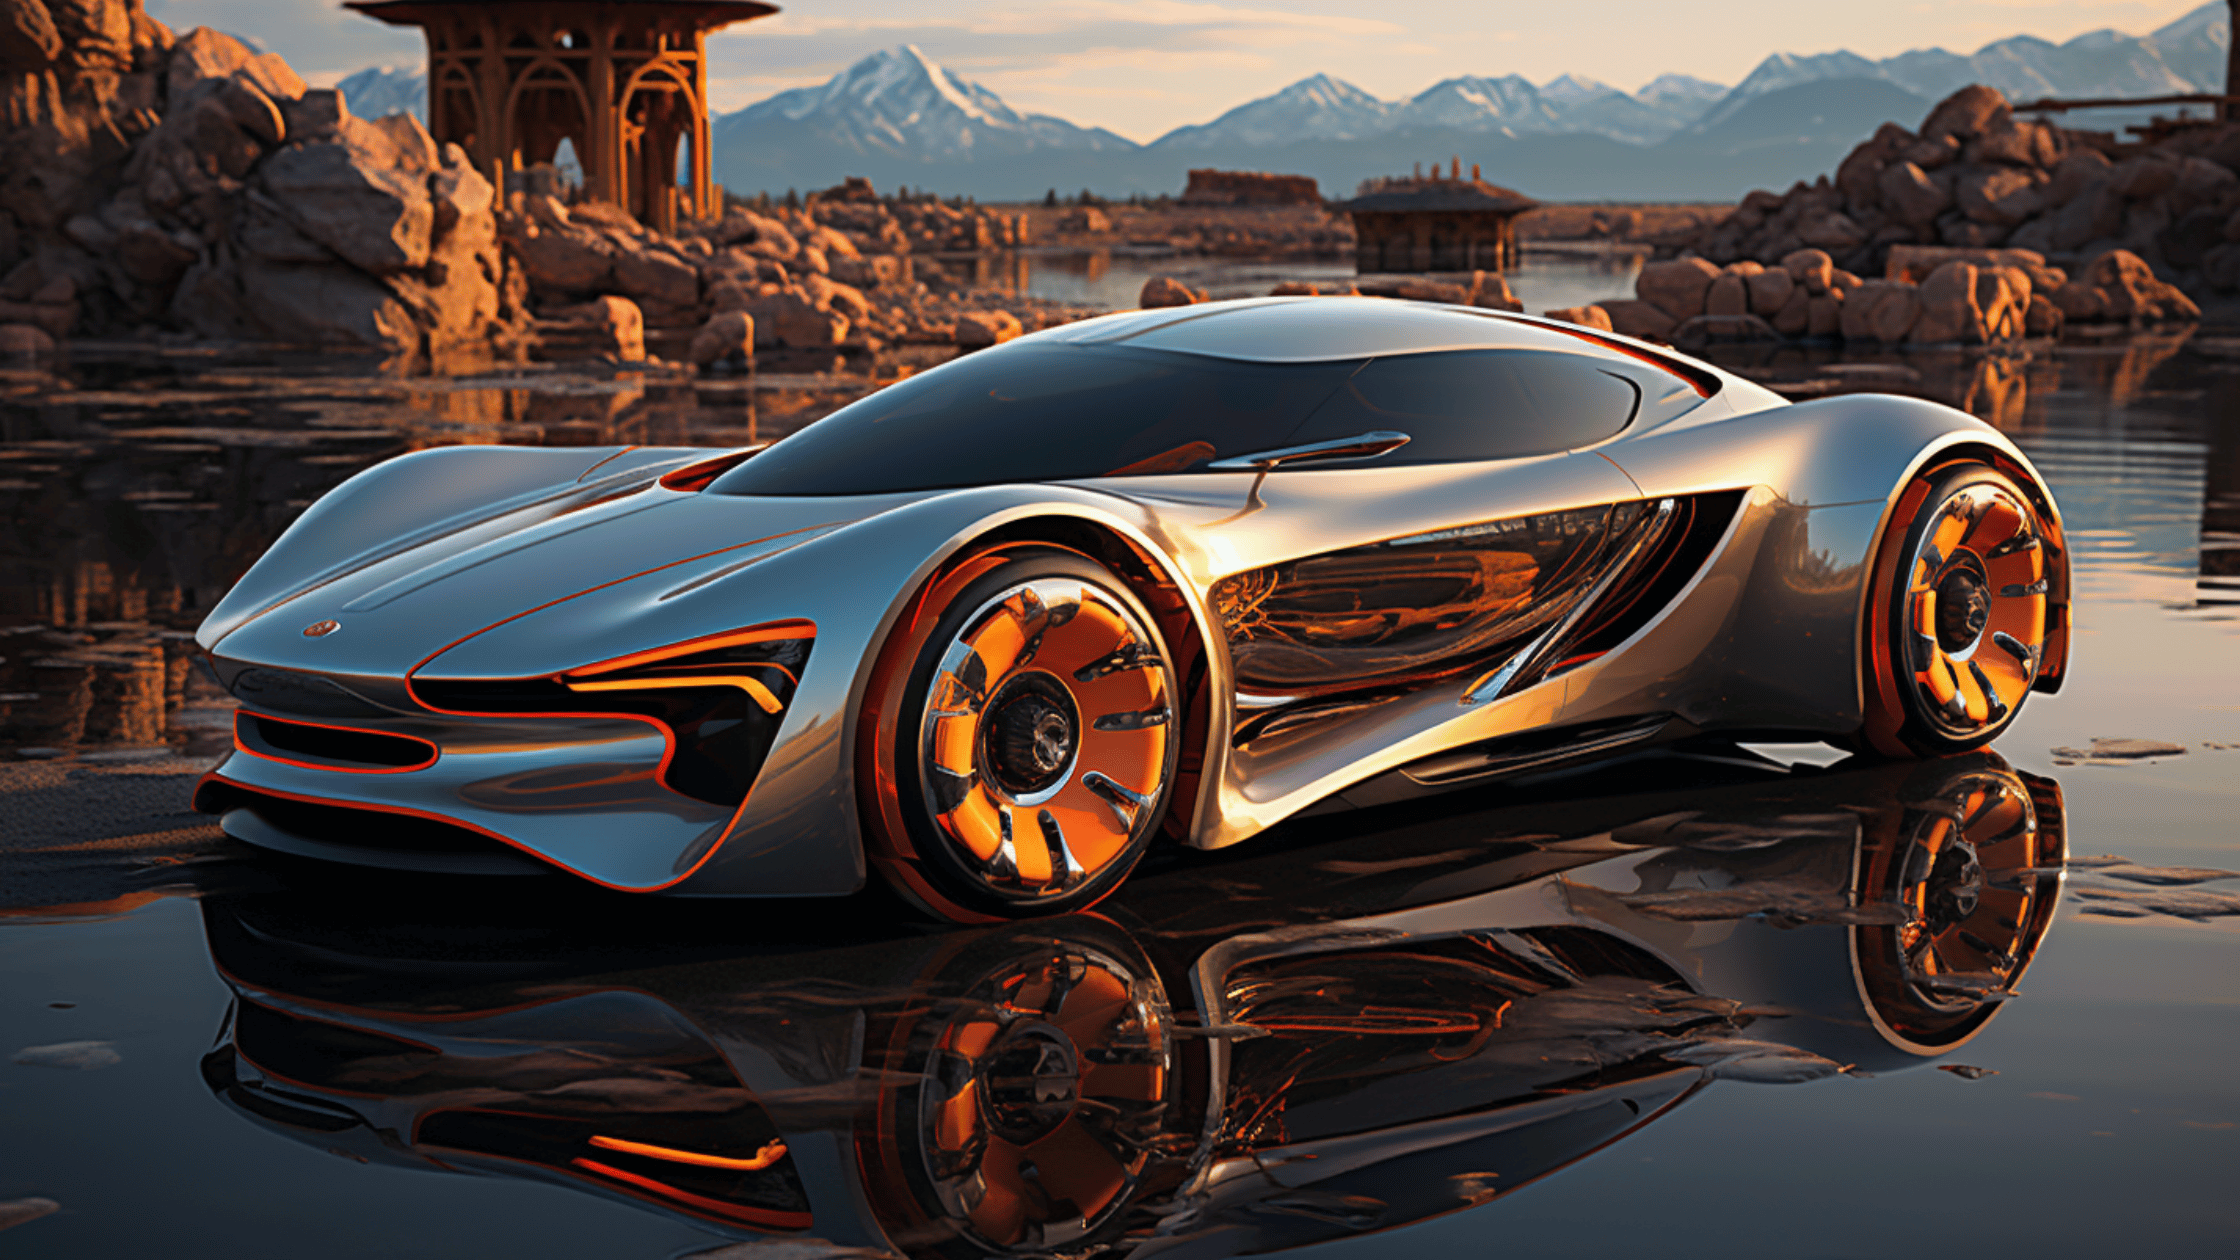 Artist Impression of a Futuristic Car - based on car innovations 